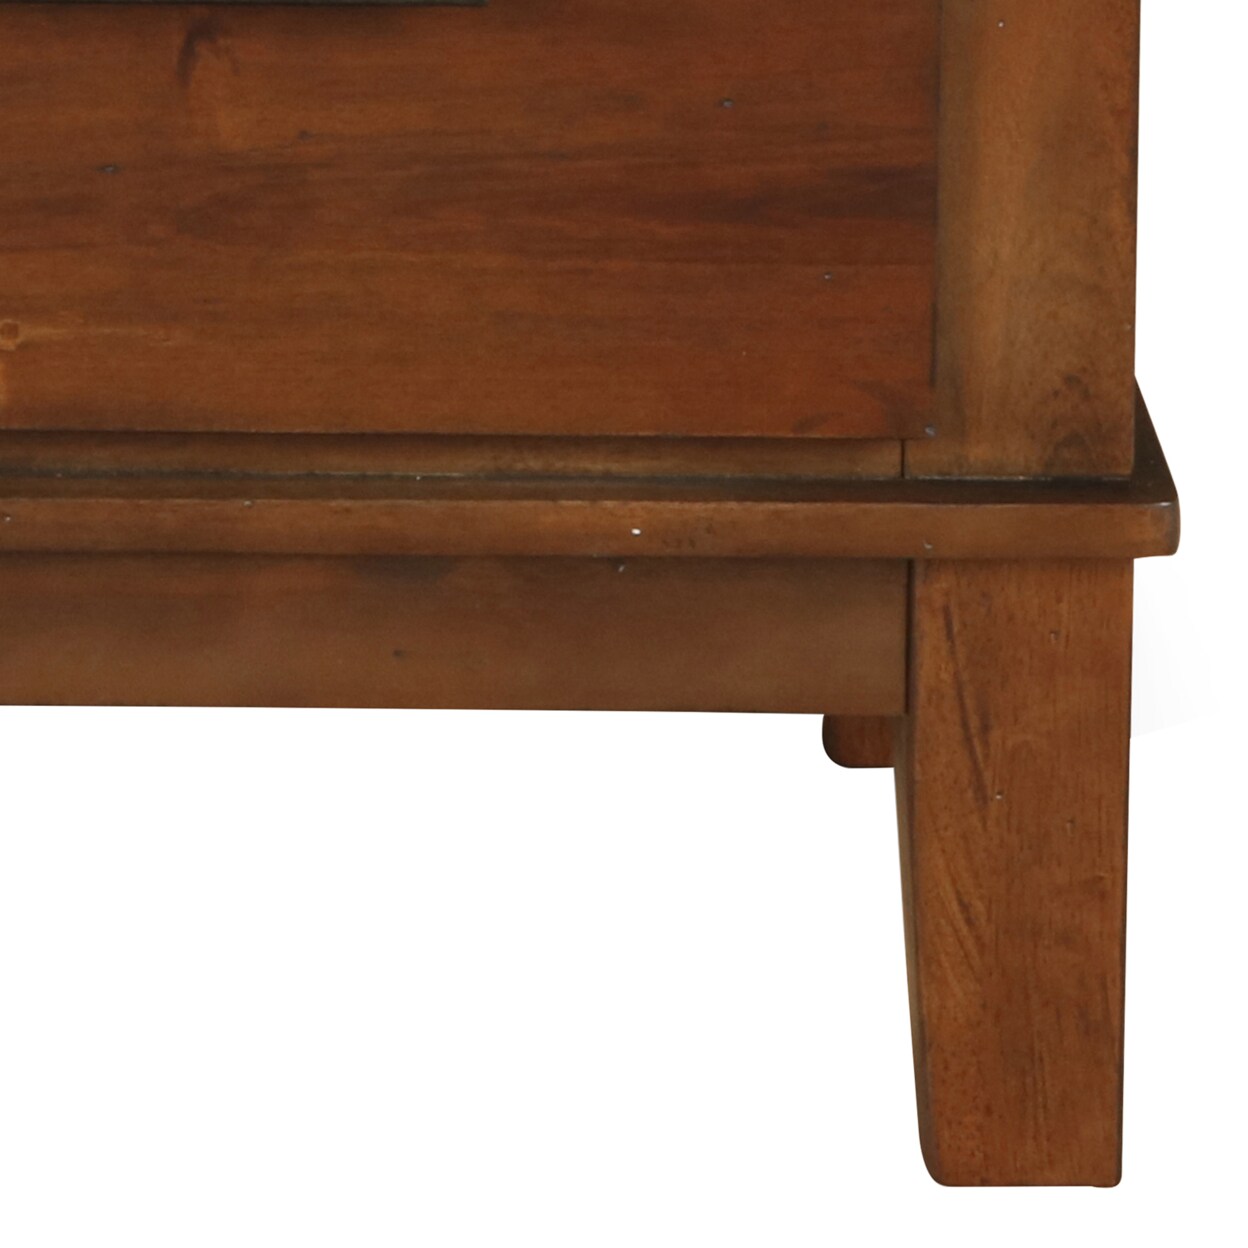 Texture JPEG drawer wood wooden